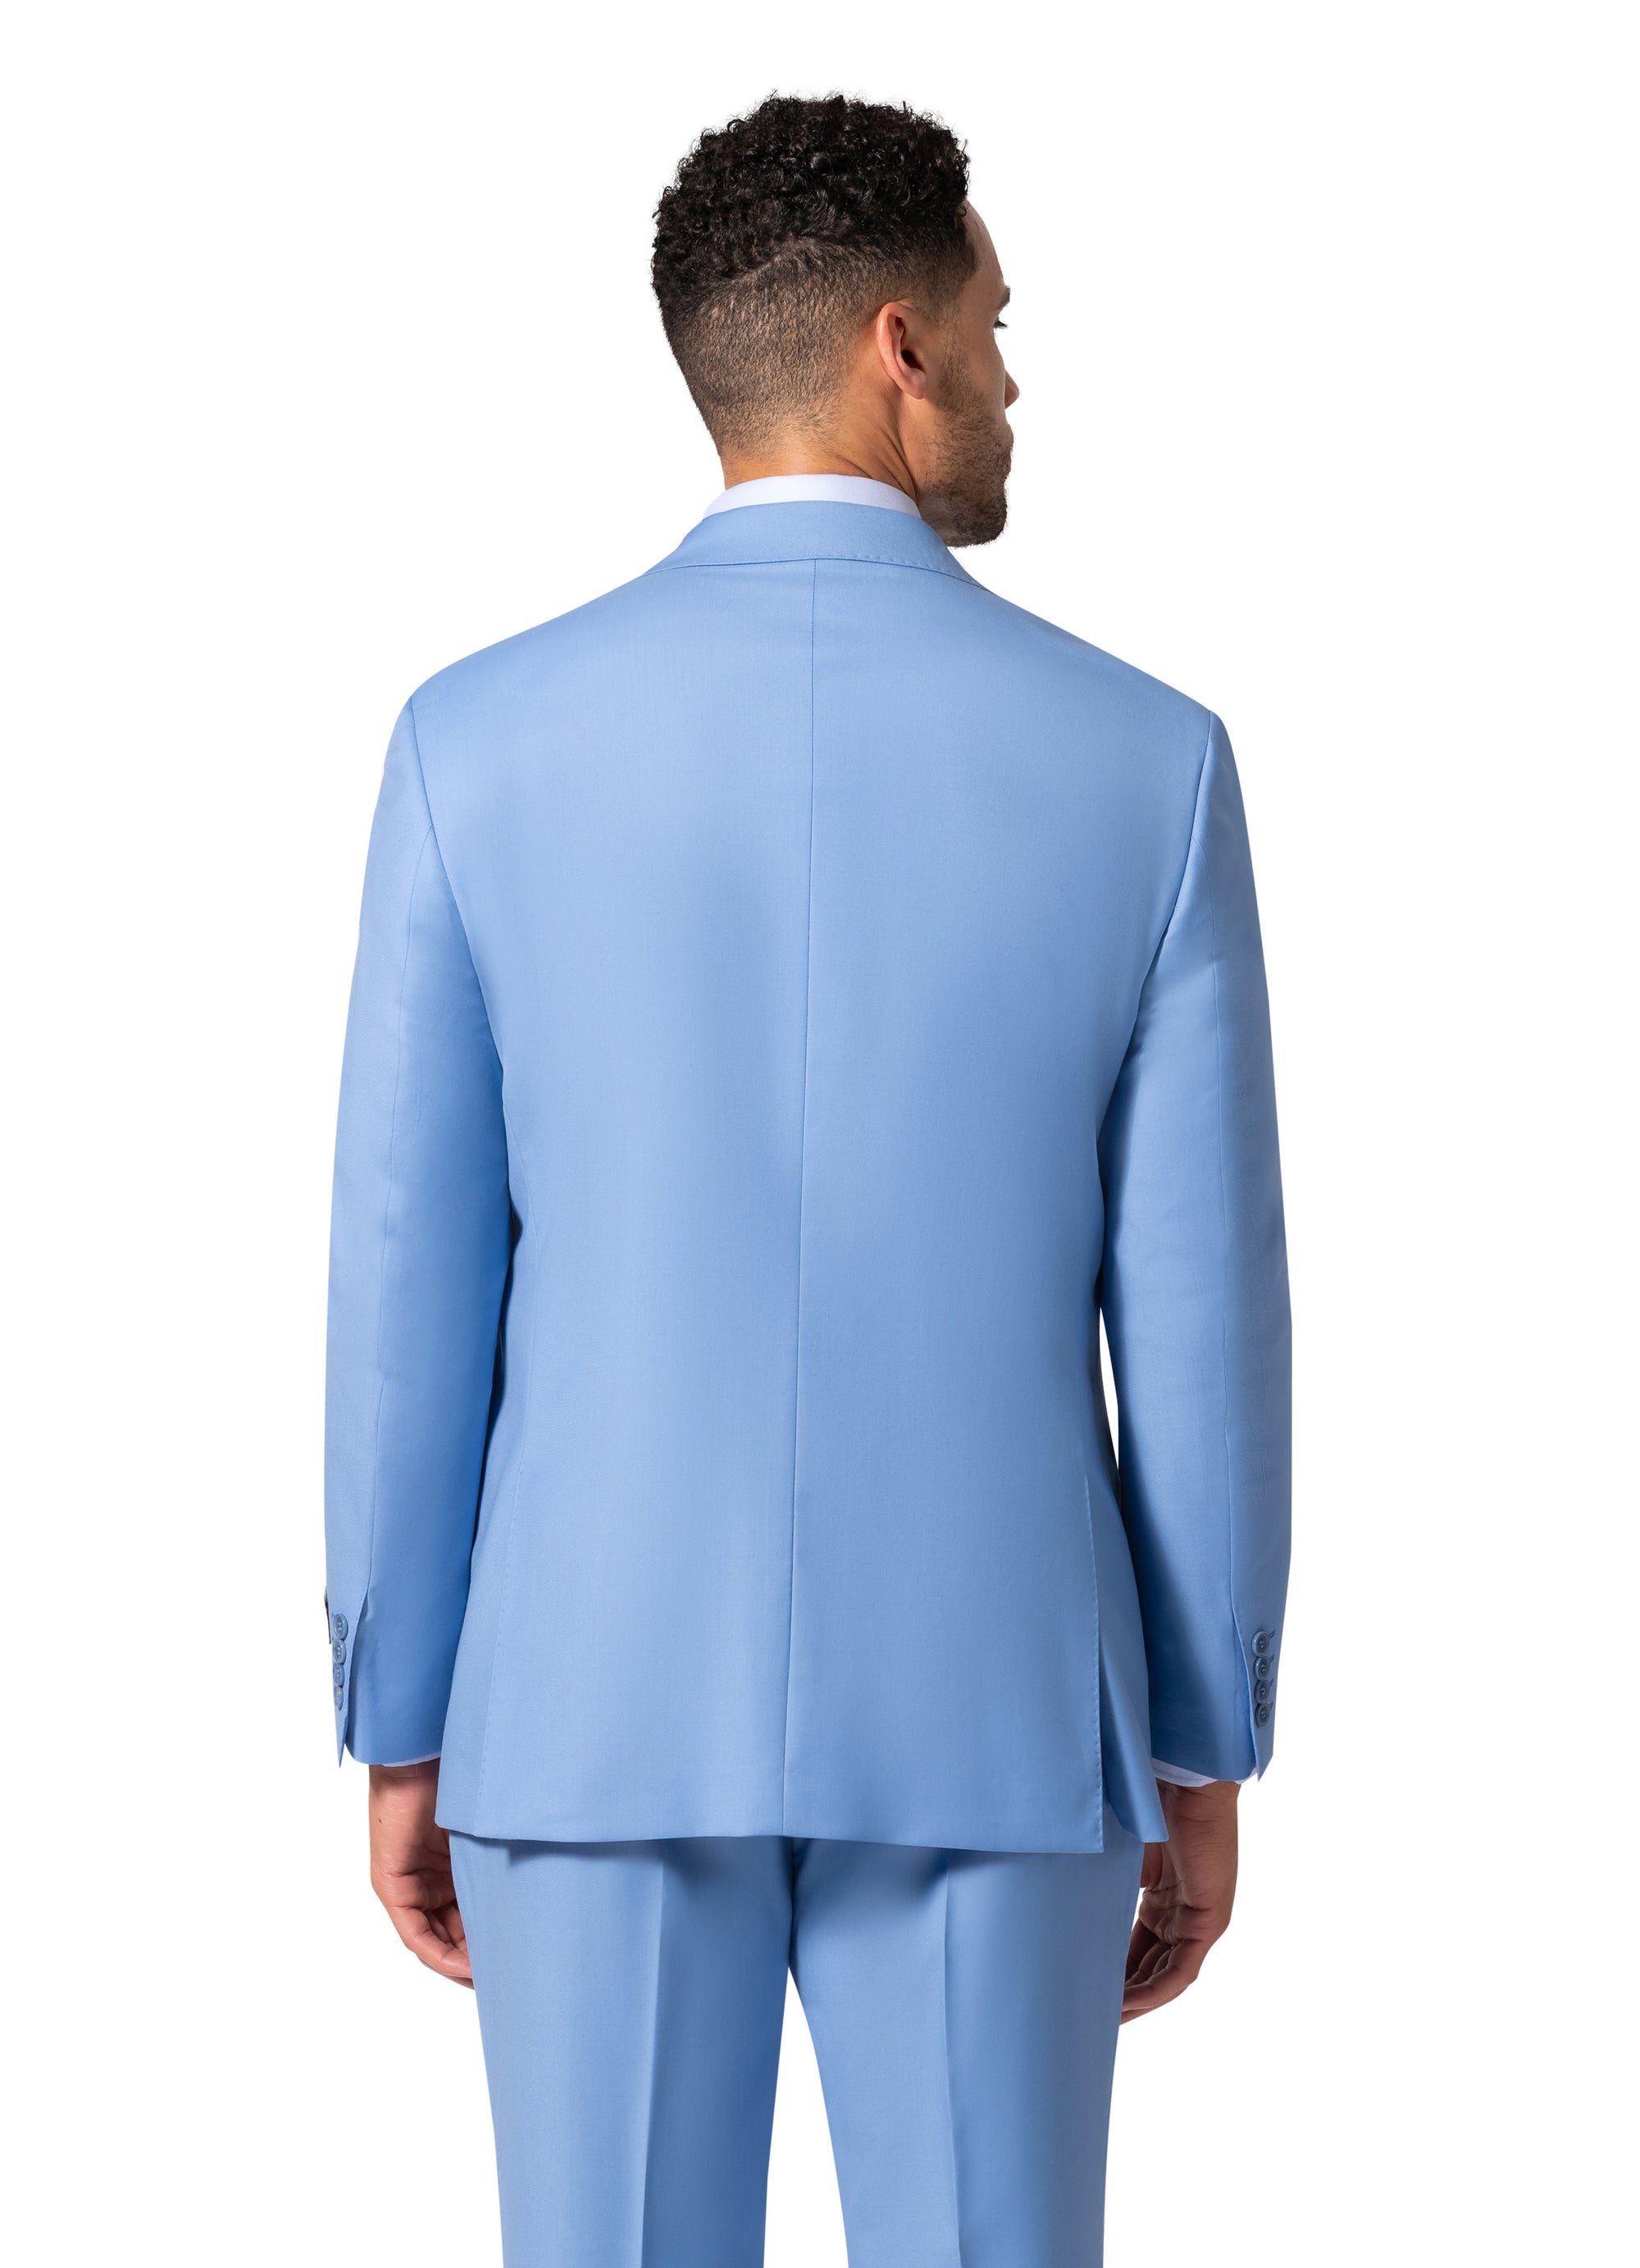 Berragamo Elegant - 10174.001 Wool Suit Modern Peak - Blue